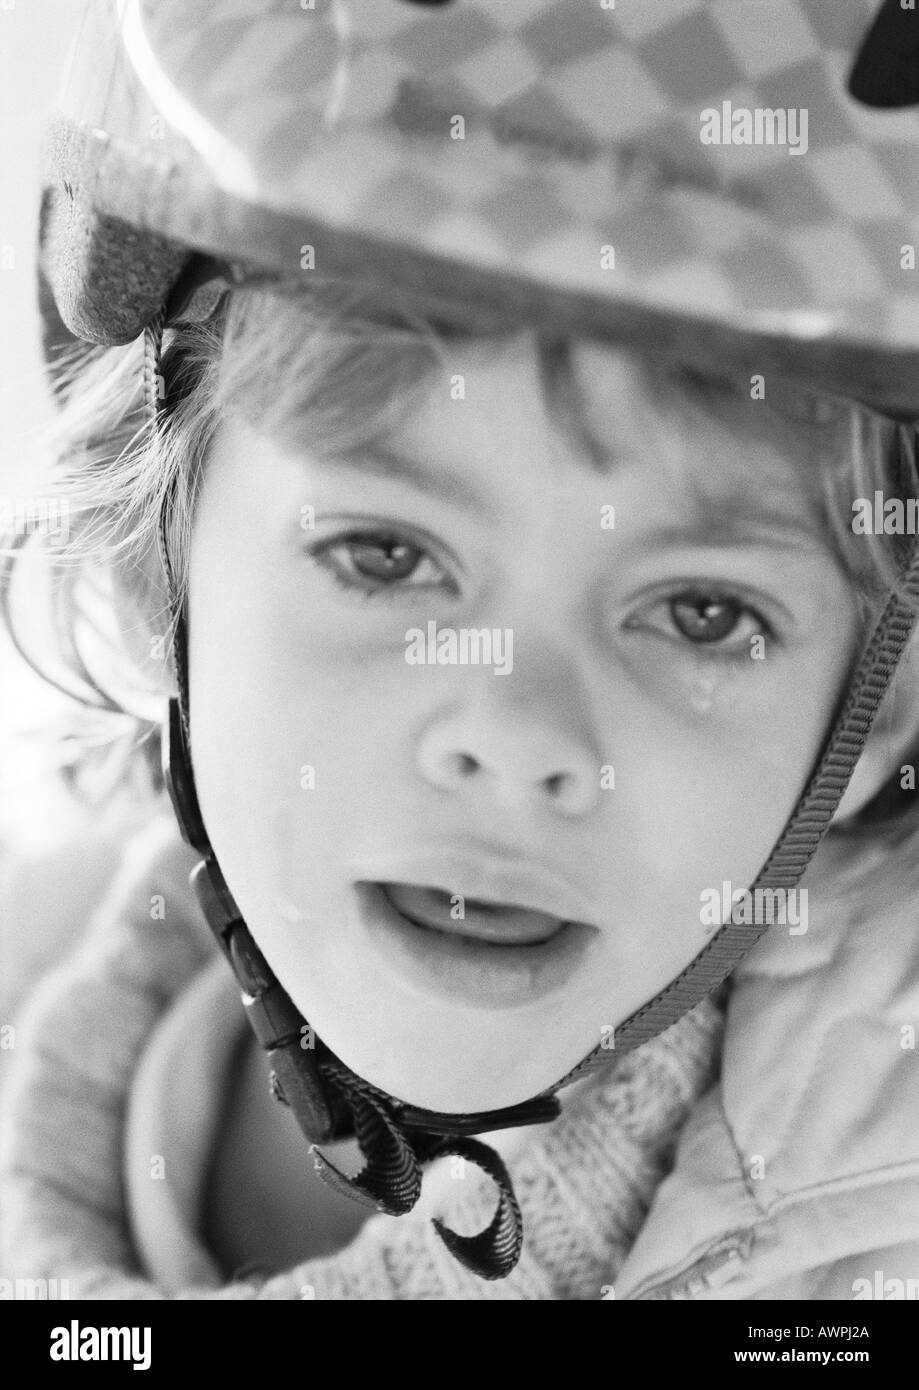 Girl wearing helmet, crying, portrait, b&w Stock Photo